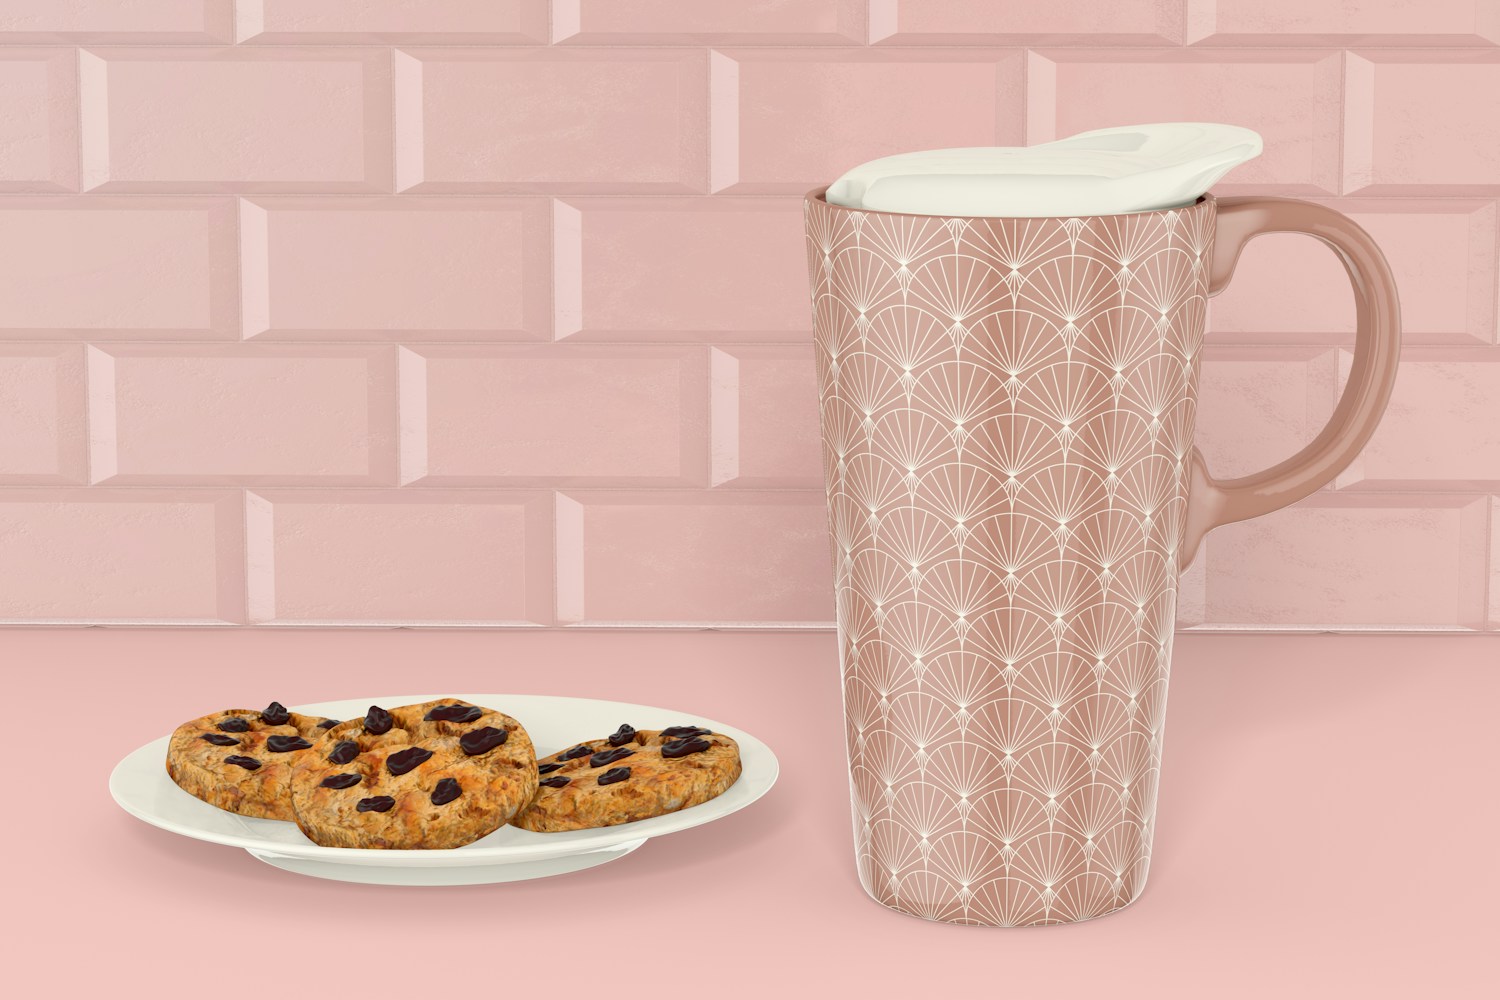 Large Ceramic Mug with Lid with Cookies Mockup